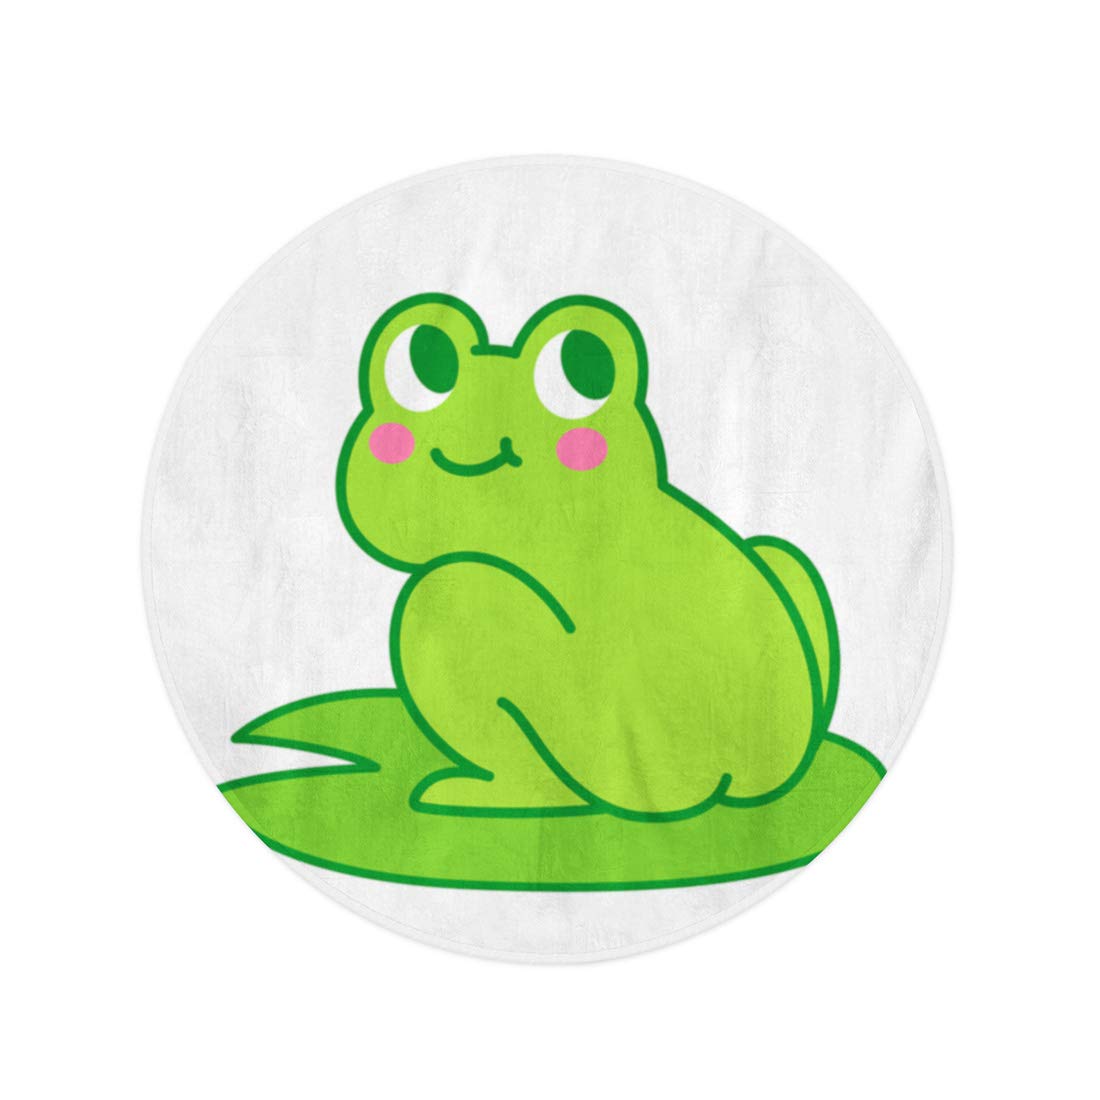 KDAGR 60 inch Round Beach Towel Blanket Green Cute Cartoon Frog